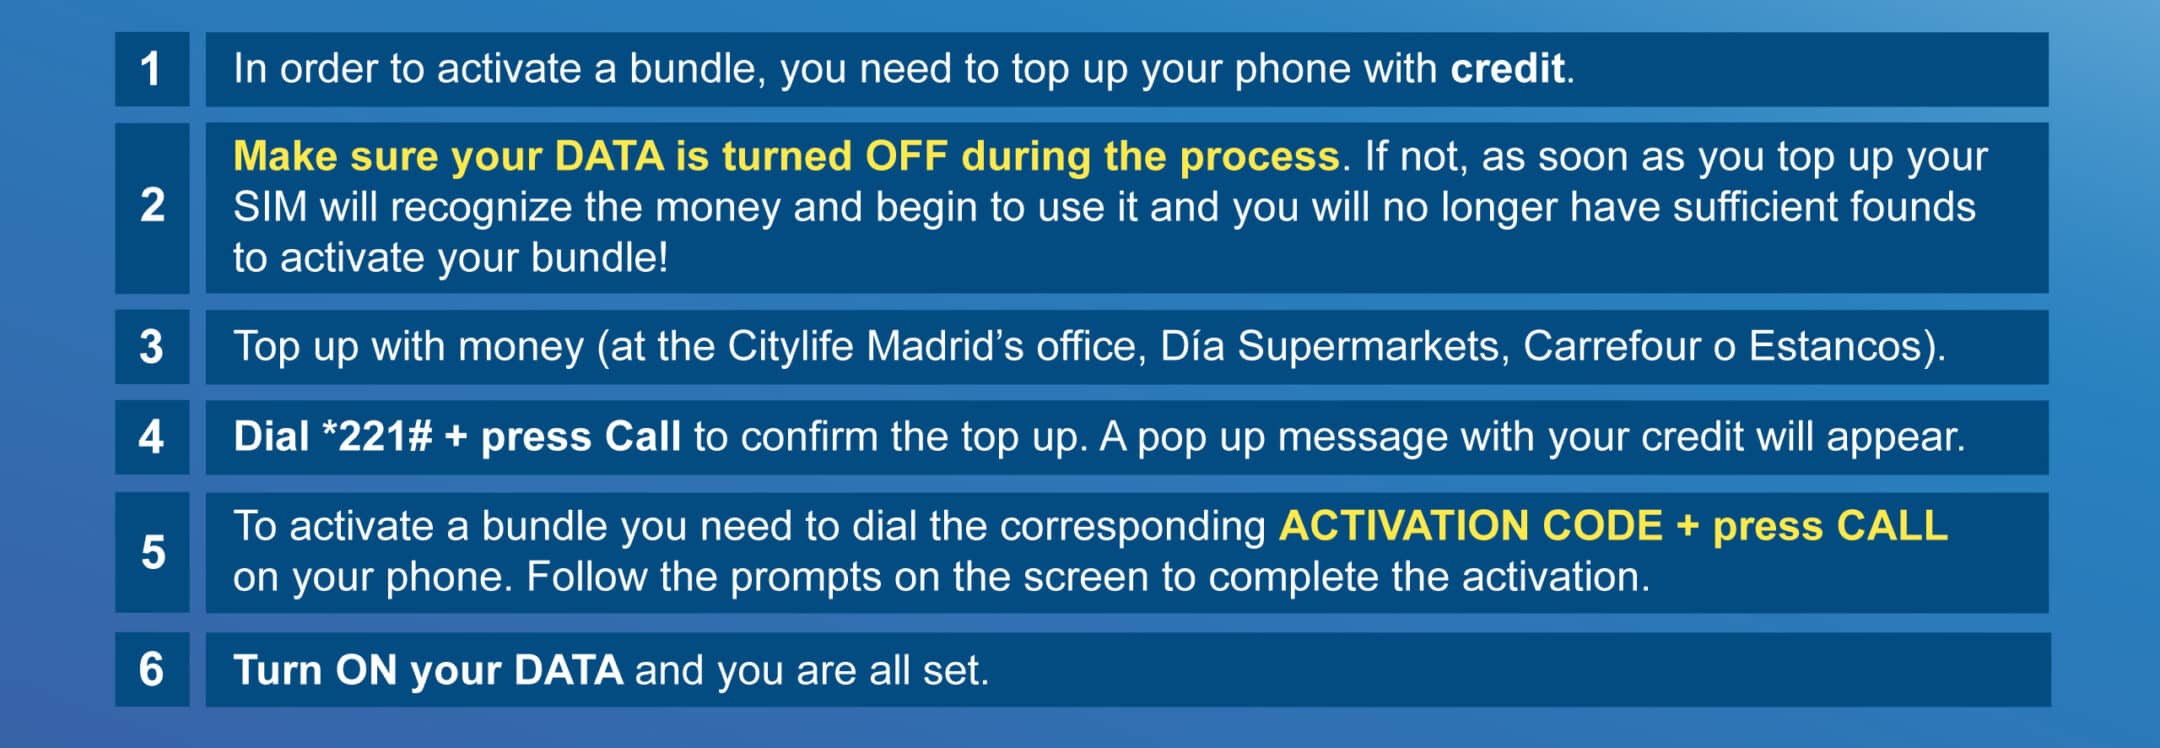 Lycamobile Ilimitado M – prepaid sim card Unlimited calls, SMS and 3GB  Internet in Spain. 